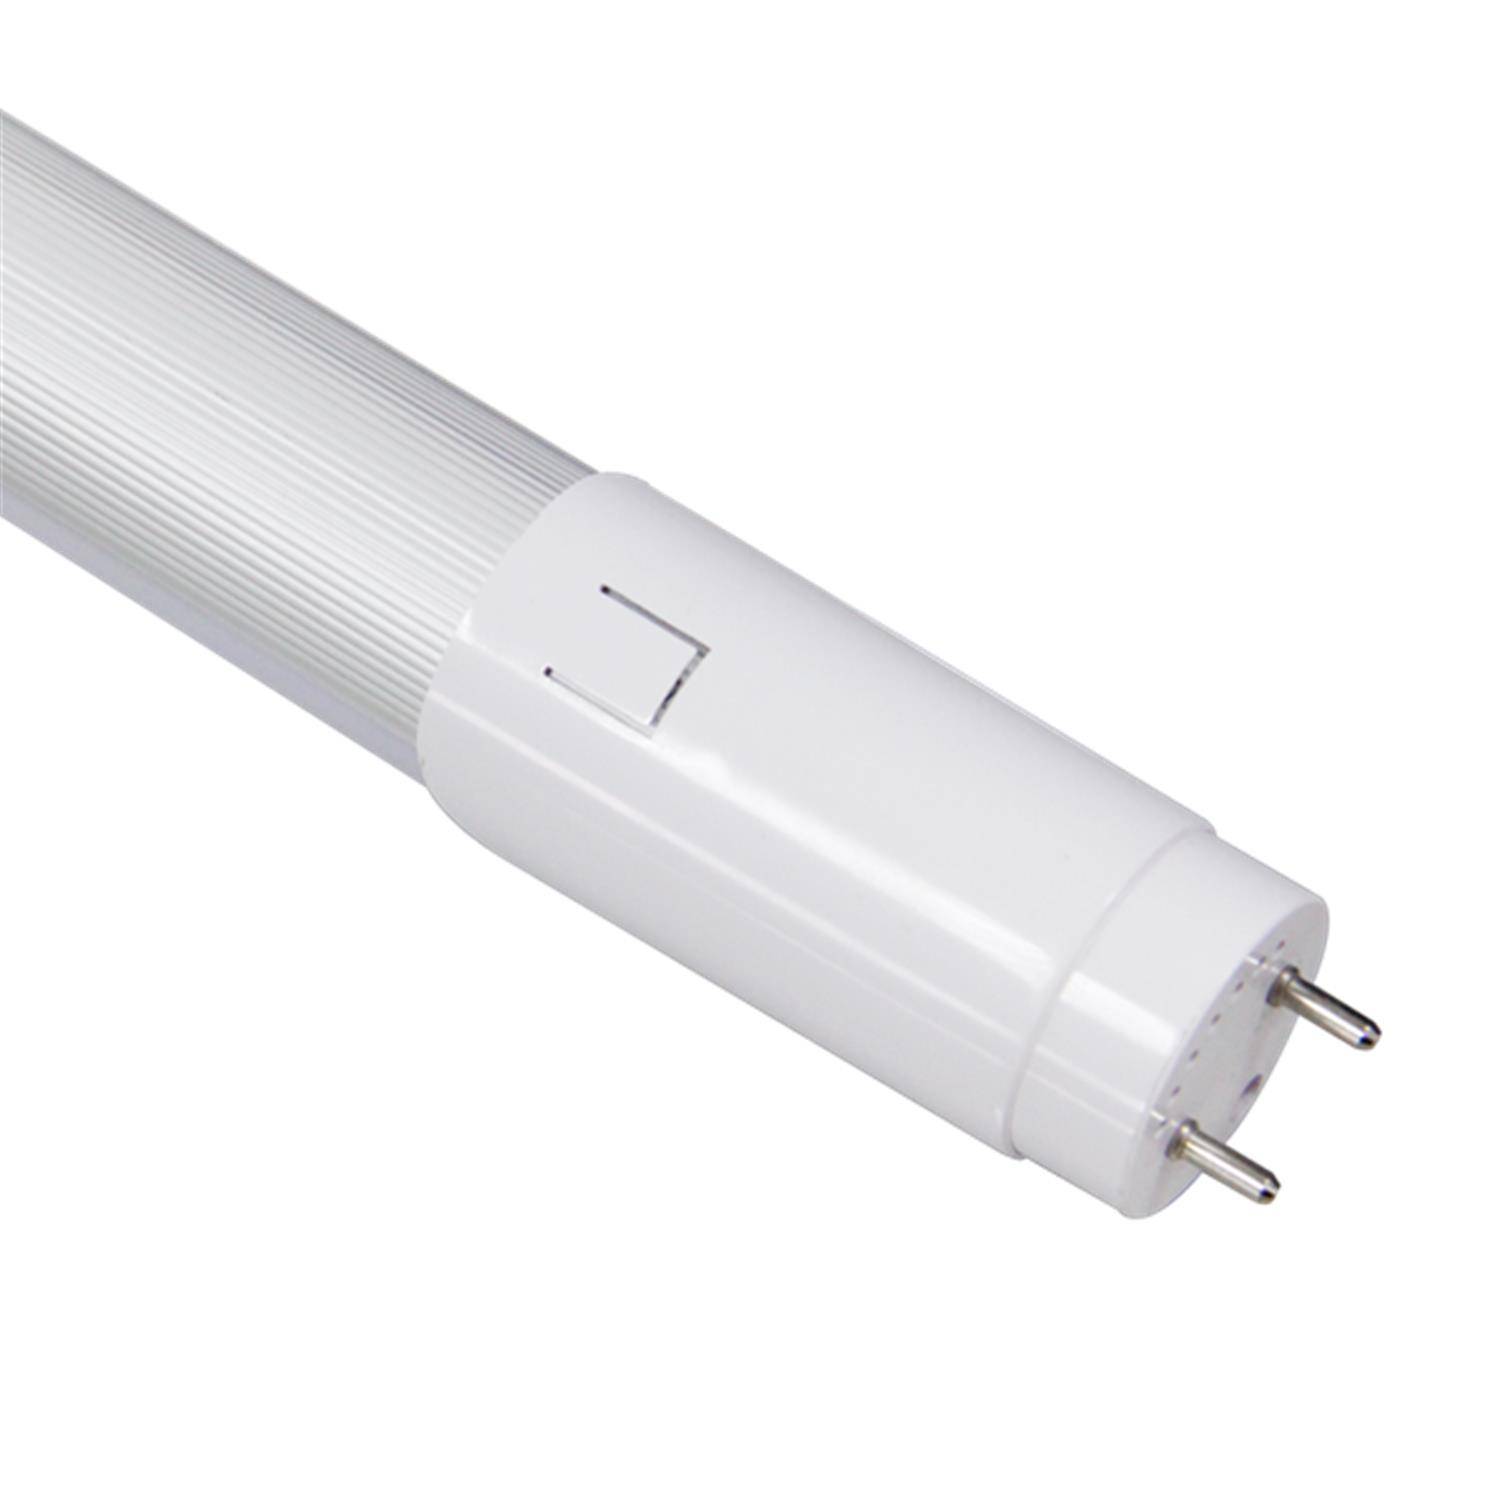 60cm LED Röhre G13 T8 Leuchtstofföhre Tube 10W ( 4000K ) Neutralweiß 850  Lumen 190° Abstrahlwinkel / inkl. Starter kaufen